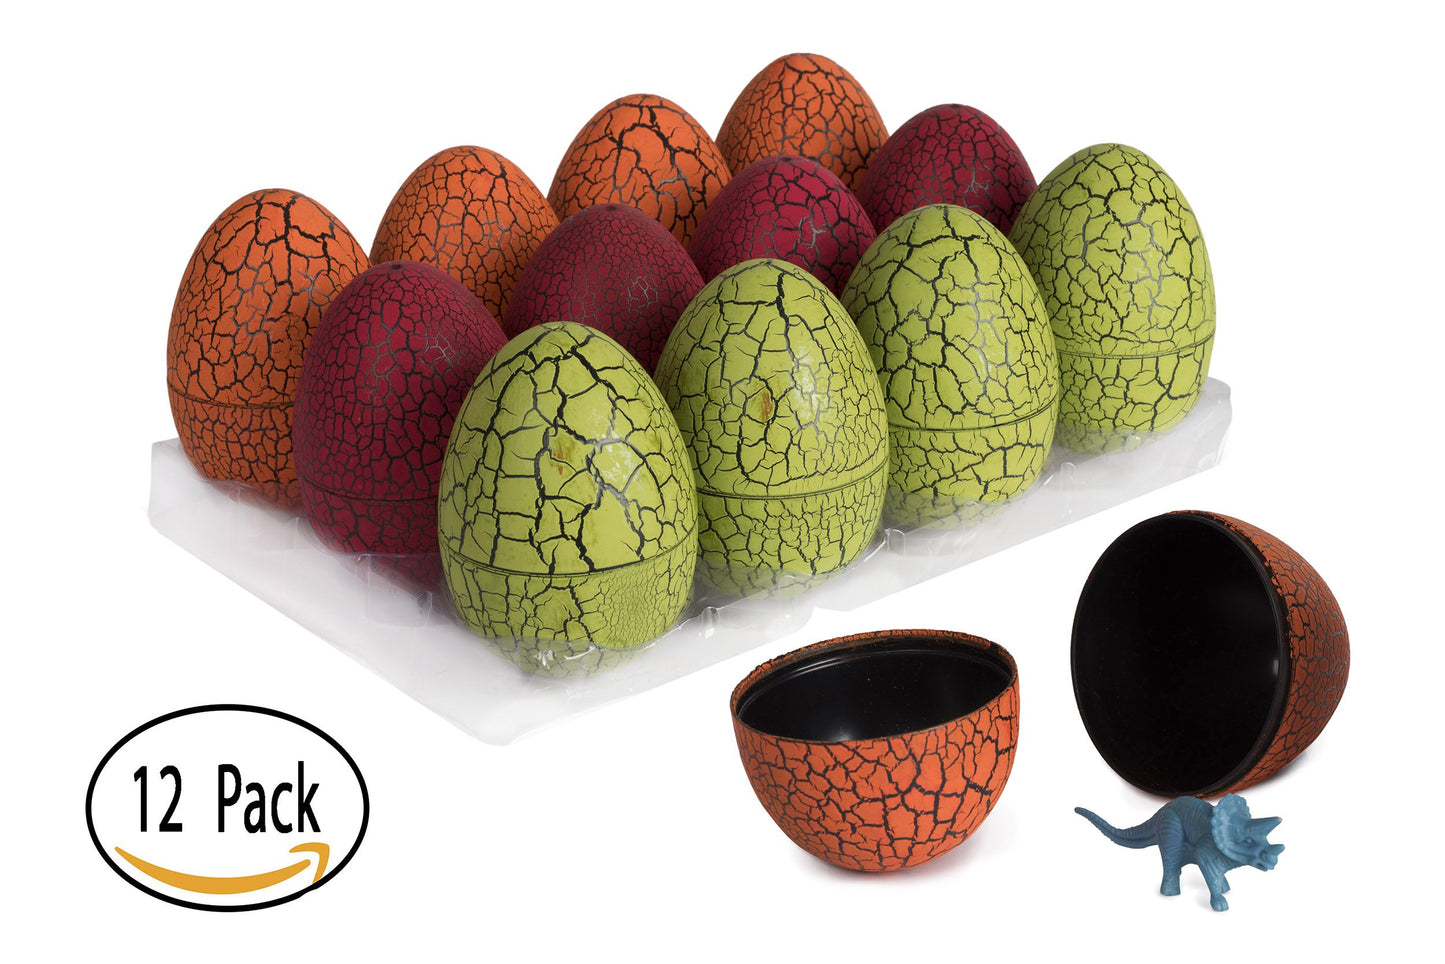 12 Pack Dinosaur Eggs With Mini Dinosaur Figures In Jurassic Dino Egg- Easter Eggs Basket Stuffers For Party Kids Easter Gift - Dinosaur Toys Party Favors